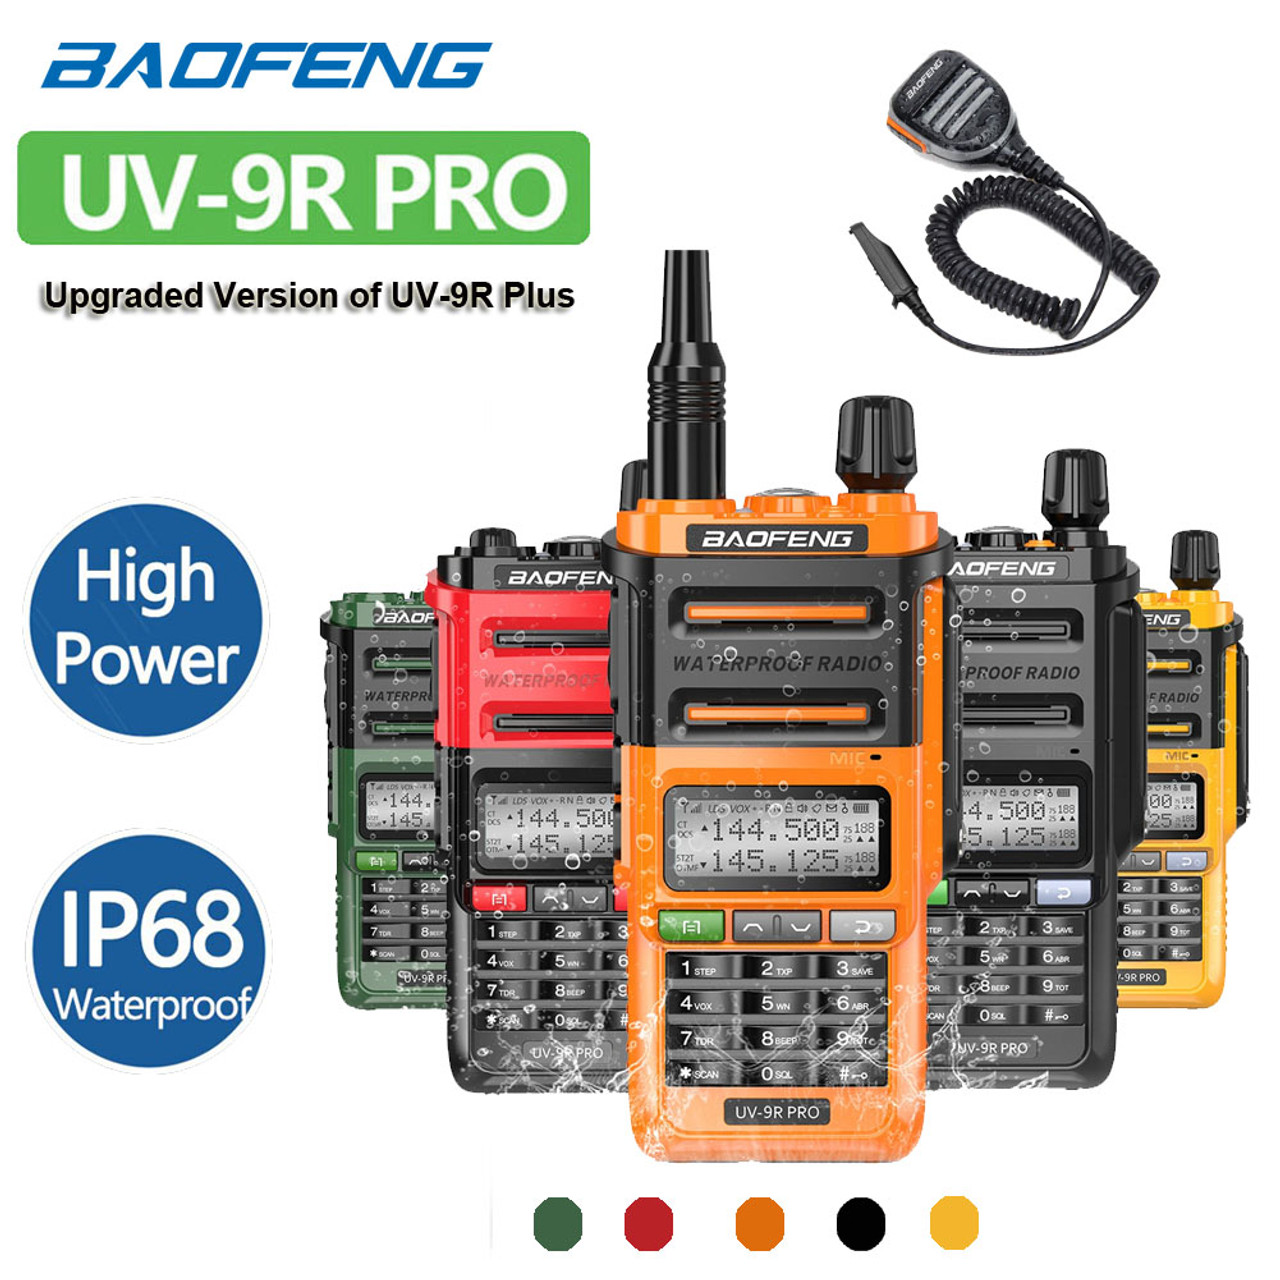 Baofeng UV-9R Plus Review 